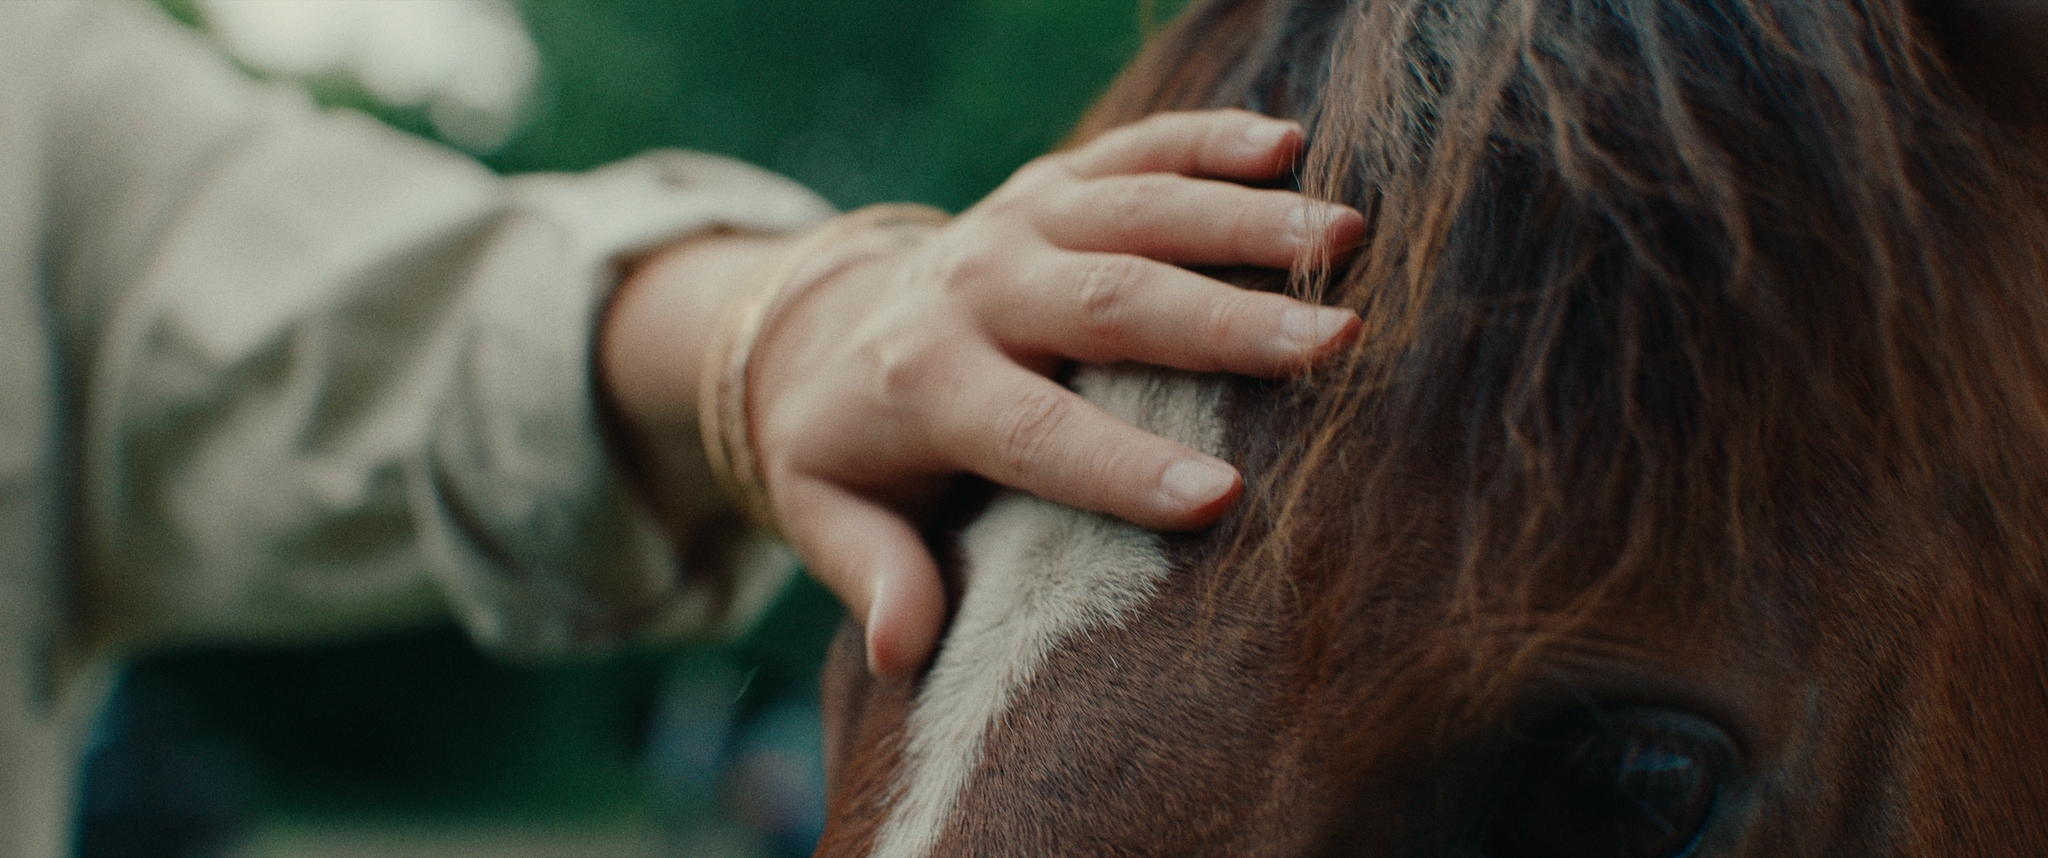 human hand rubbing horse head